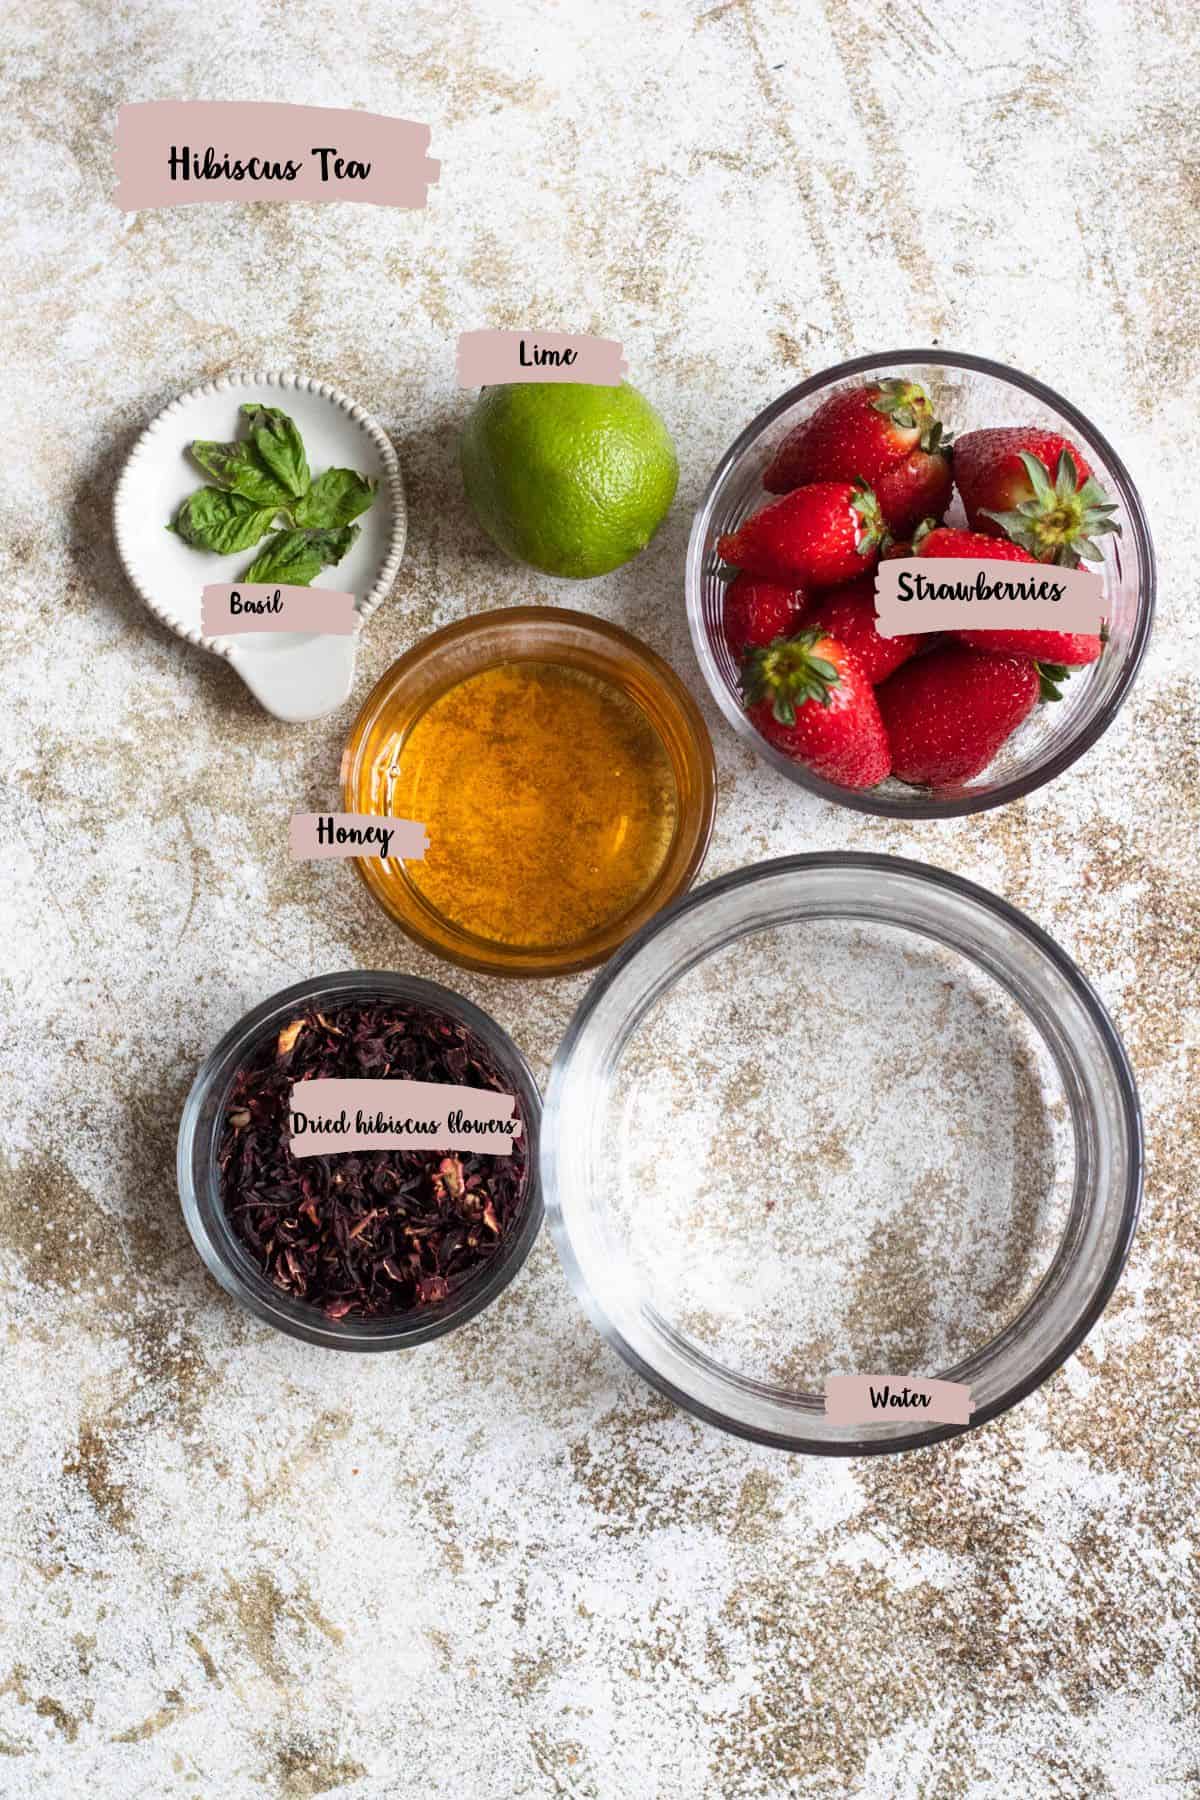 Ingredients shown to make Hibiscus tea. 